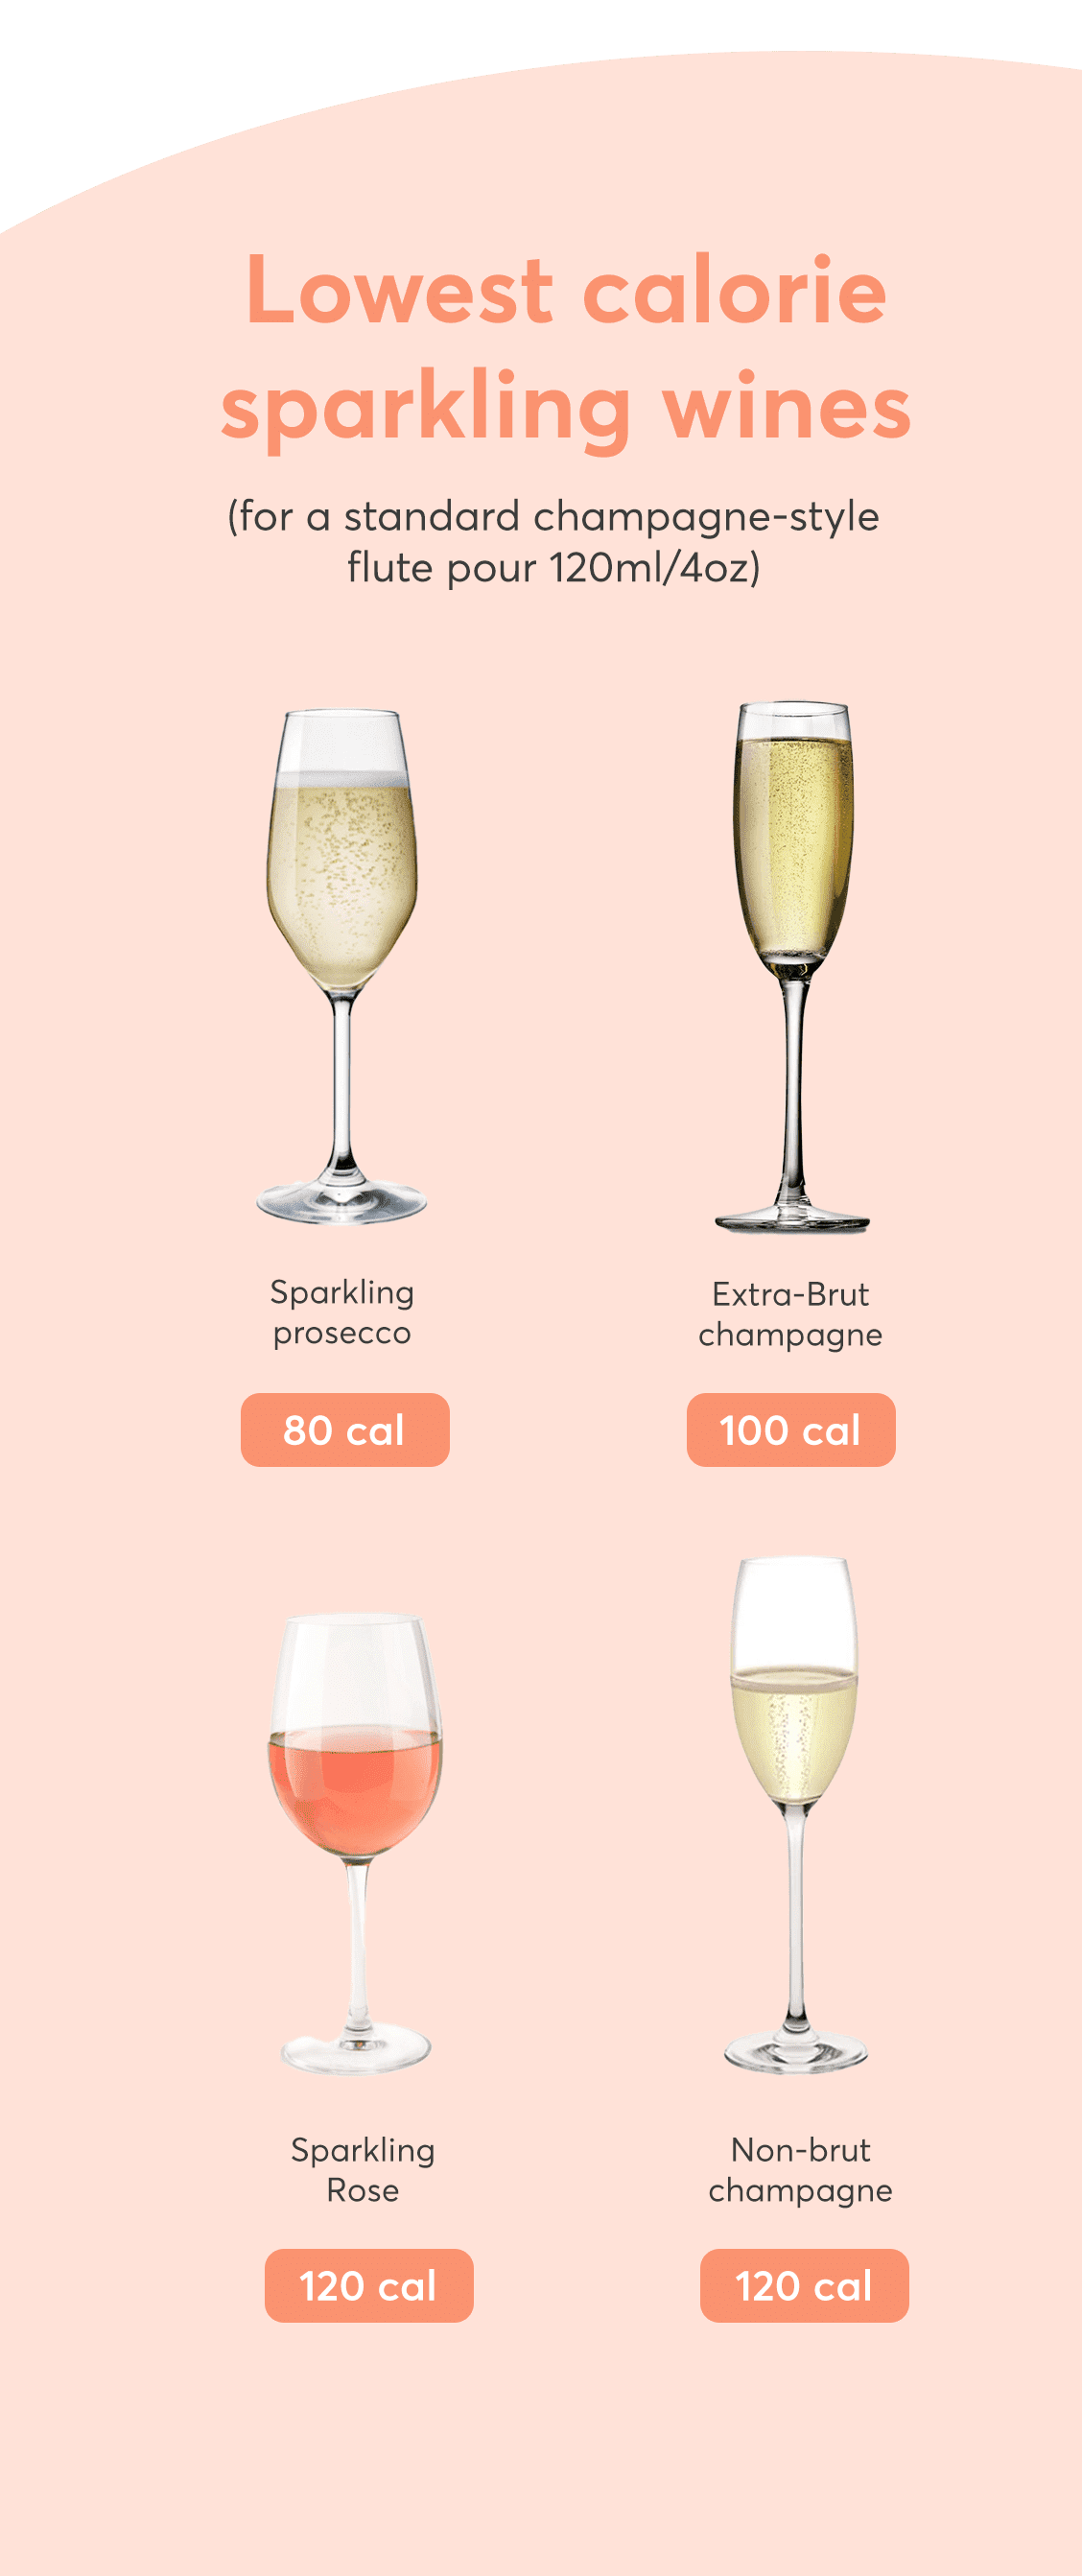 Lowest calorie sparkling wines & champagnes